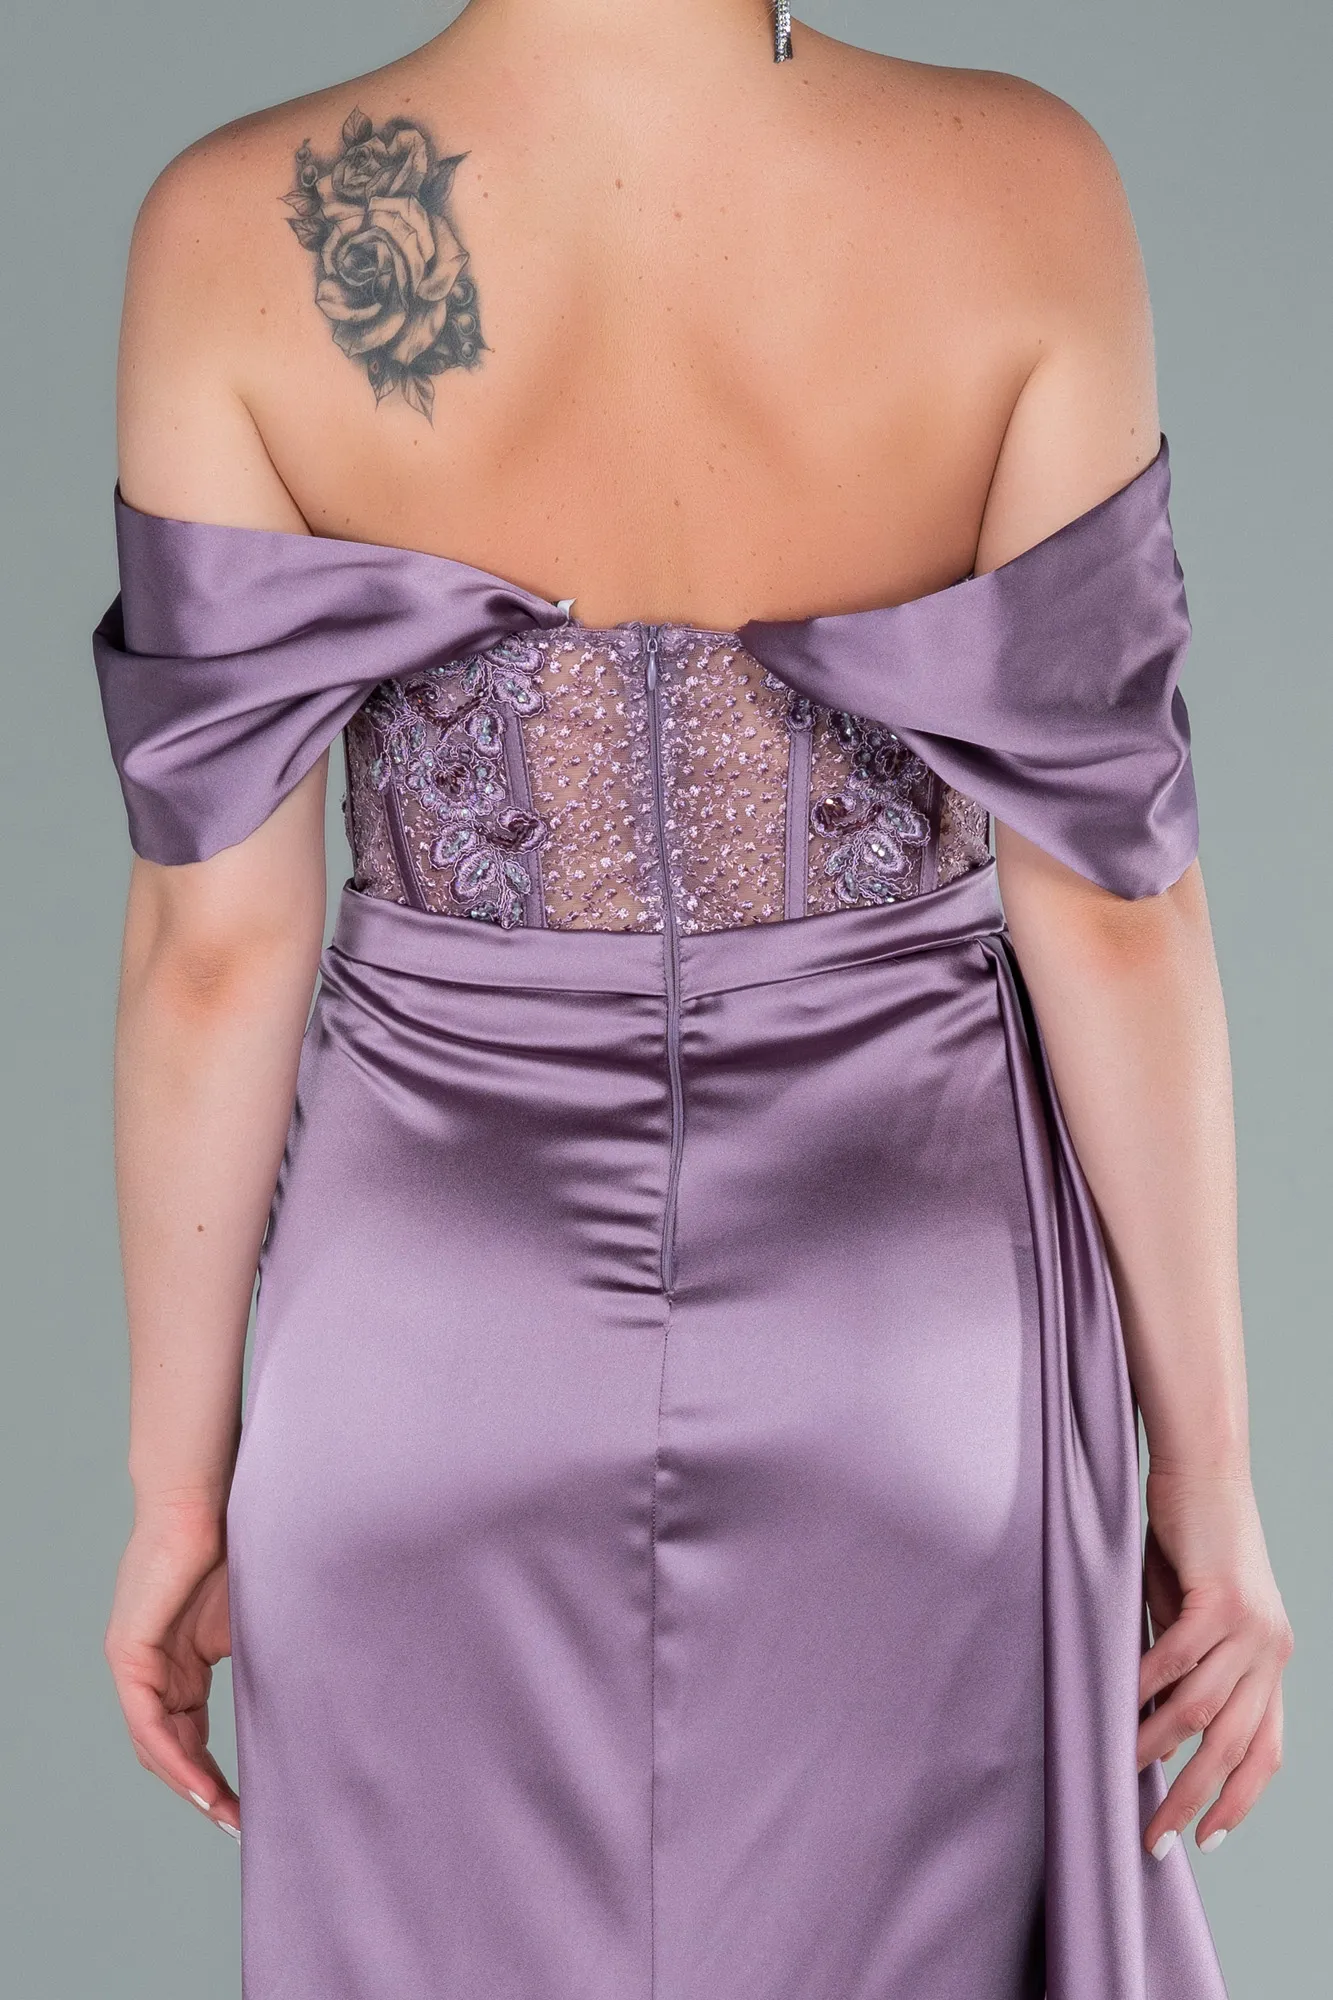 Lavender-Long Satin Evening Dress ABU3446